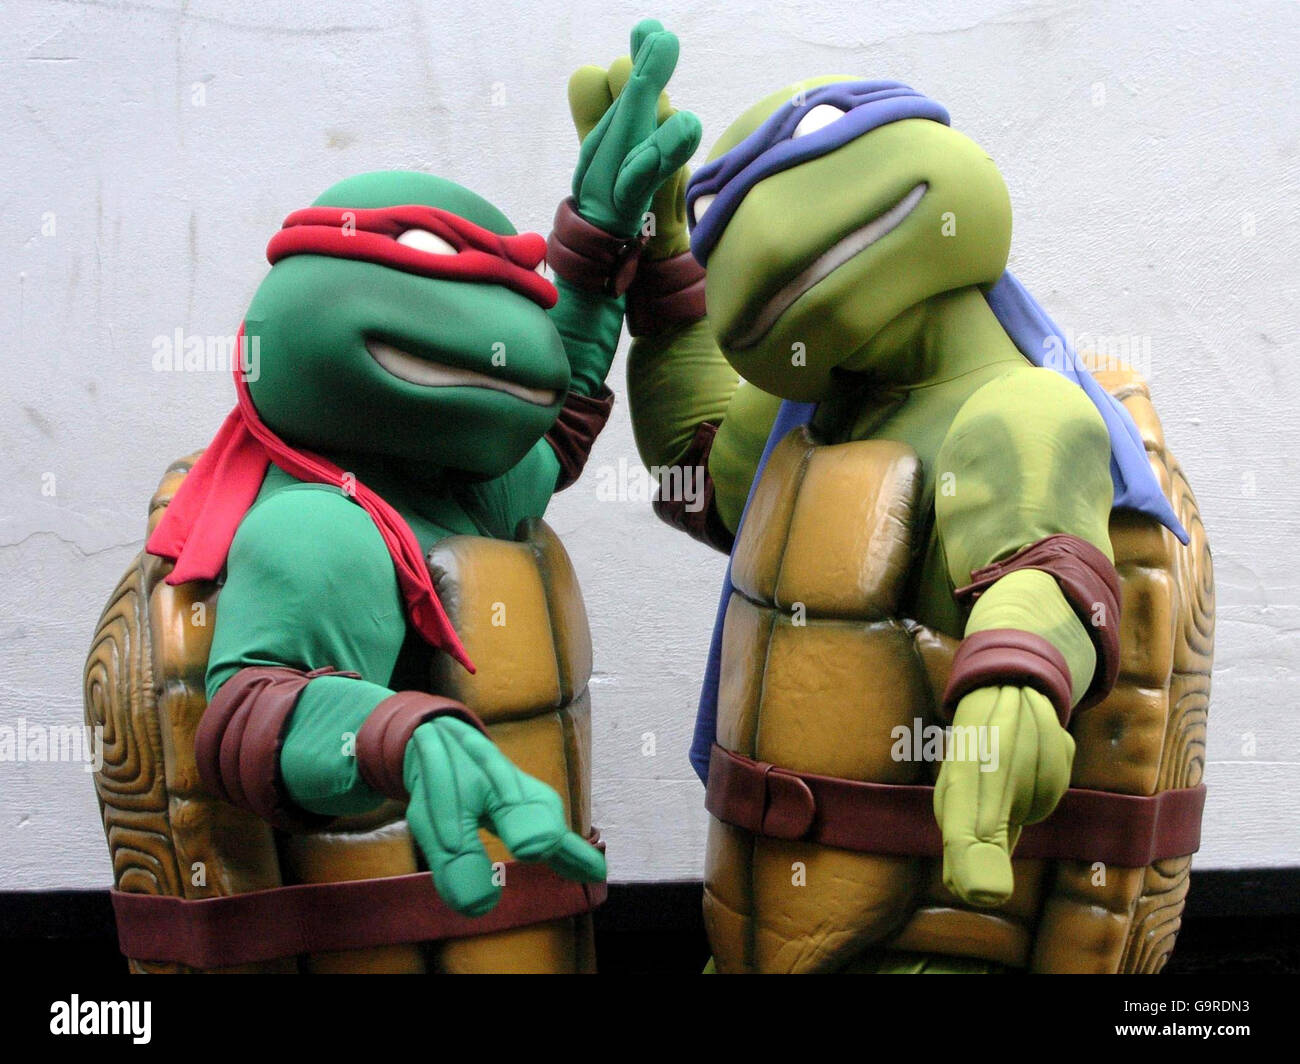 Teenage Mutant Ninja Turtles launch new movie. Teenage Mutant Ninja Turtles Raphael, left, and Michelangelo launch the new film, TMNT: The Movie, in London. Stock Photo